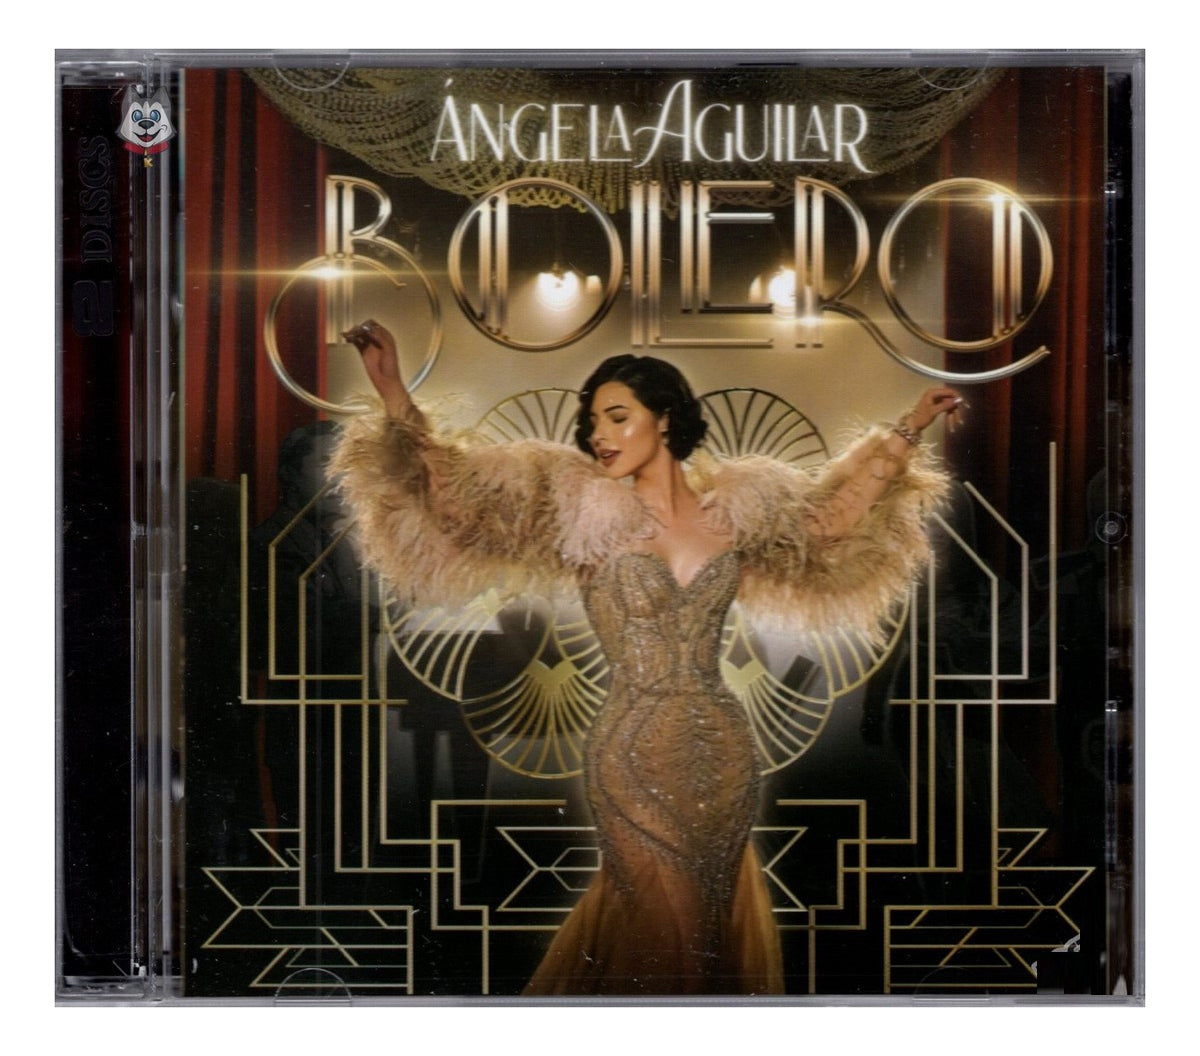 Angela Aguilar Bolero Disco Cd + Dvd